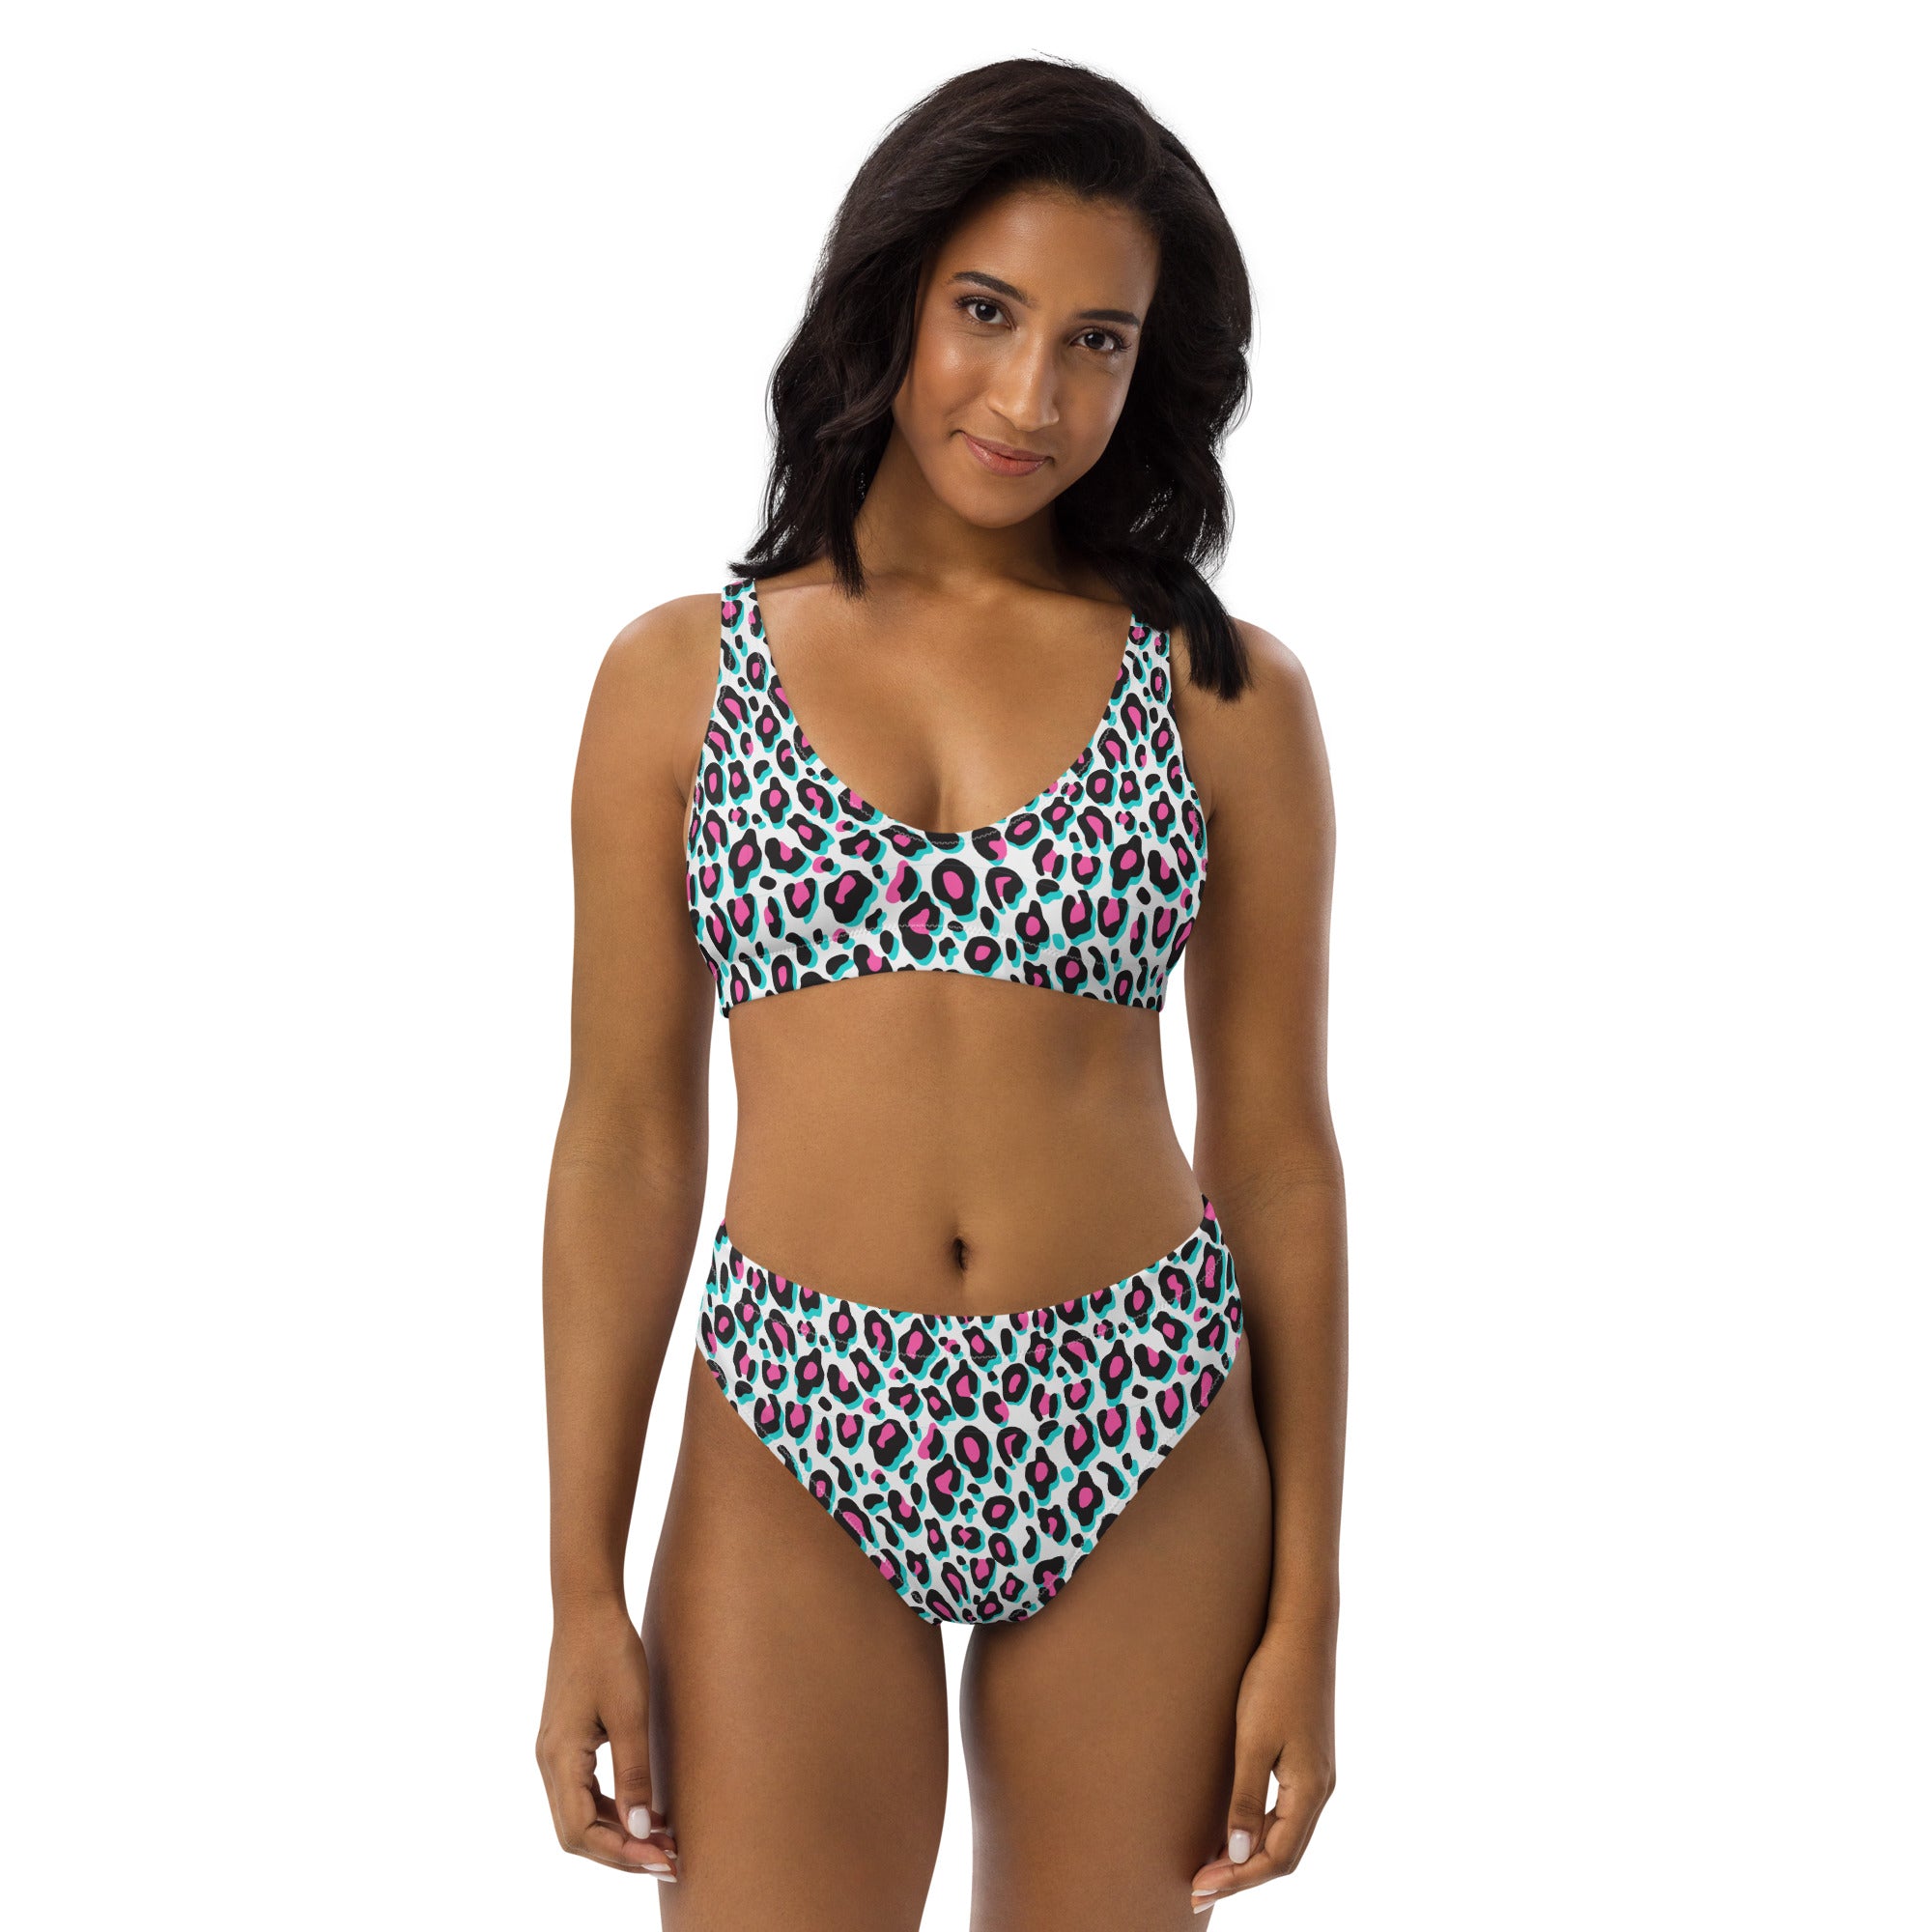 Recycled high-waisted bikini Miami Leopard